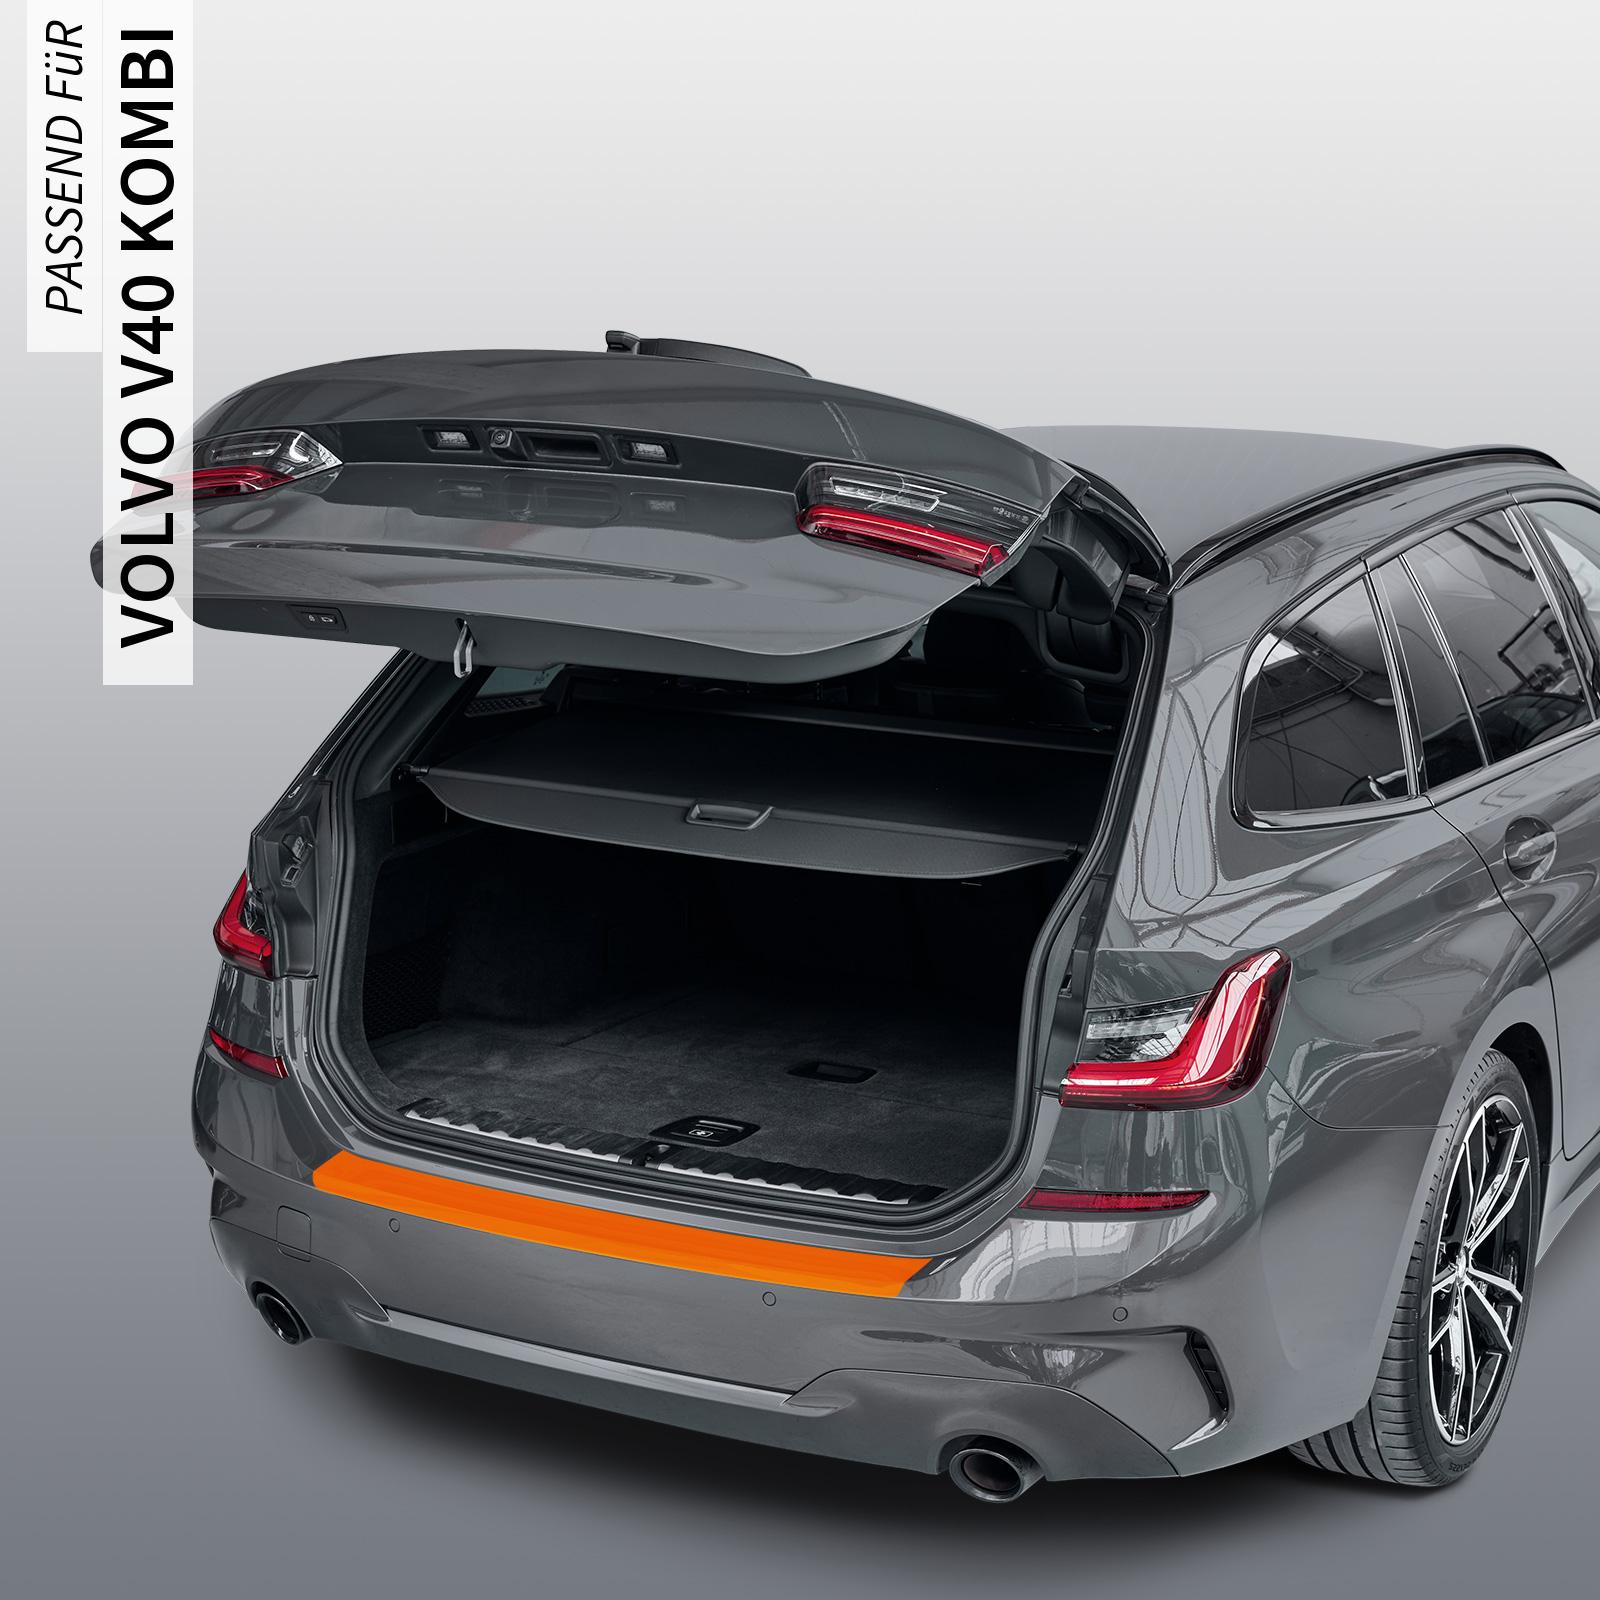 Ladekantenschutzfolie - Transparent Glatt MATT 110 µm stark  für Volvo V40 Kombi bis BJ 2005